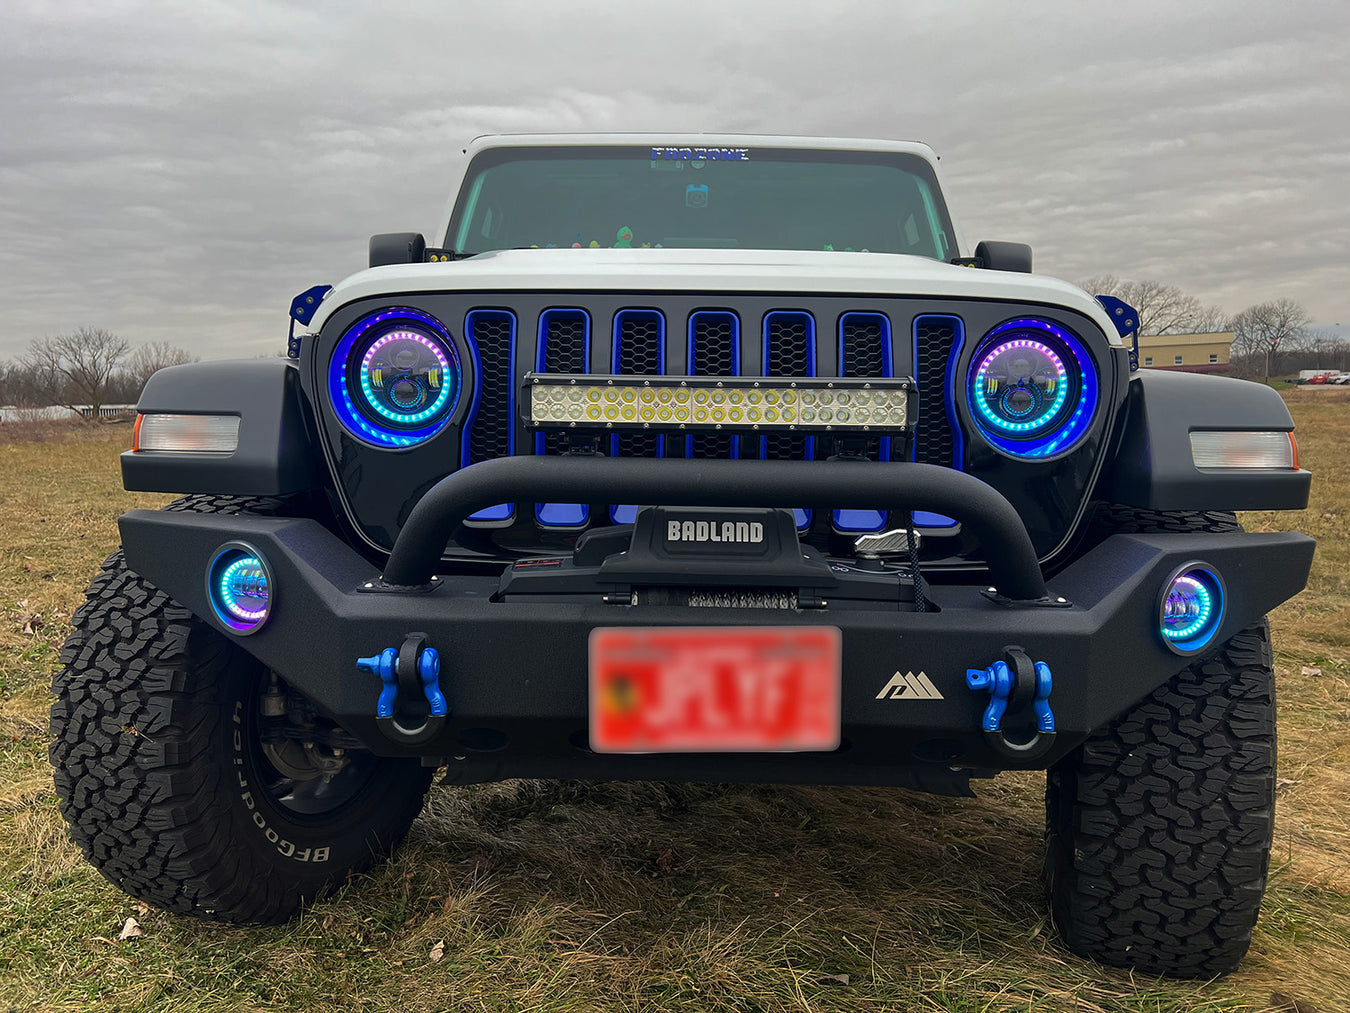 JEEP Specific LED Lighting/Jeep Exterior Lighting Upgrades